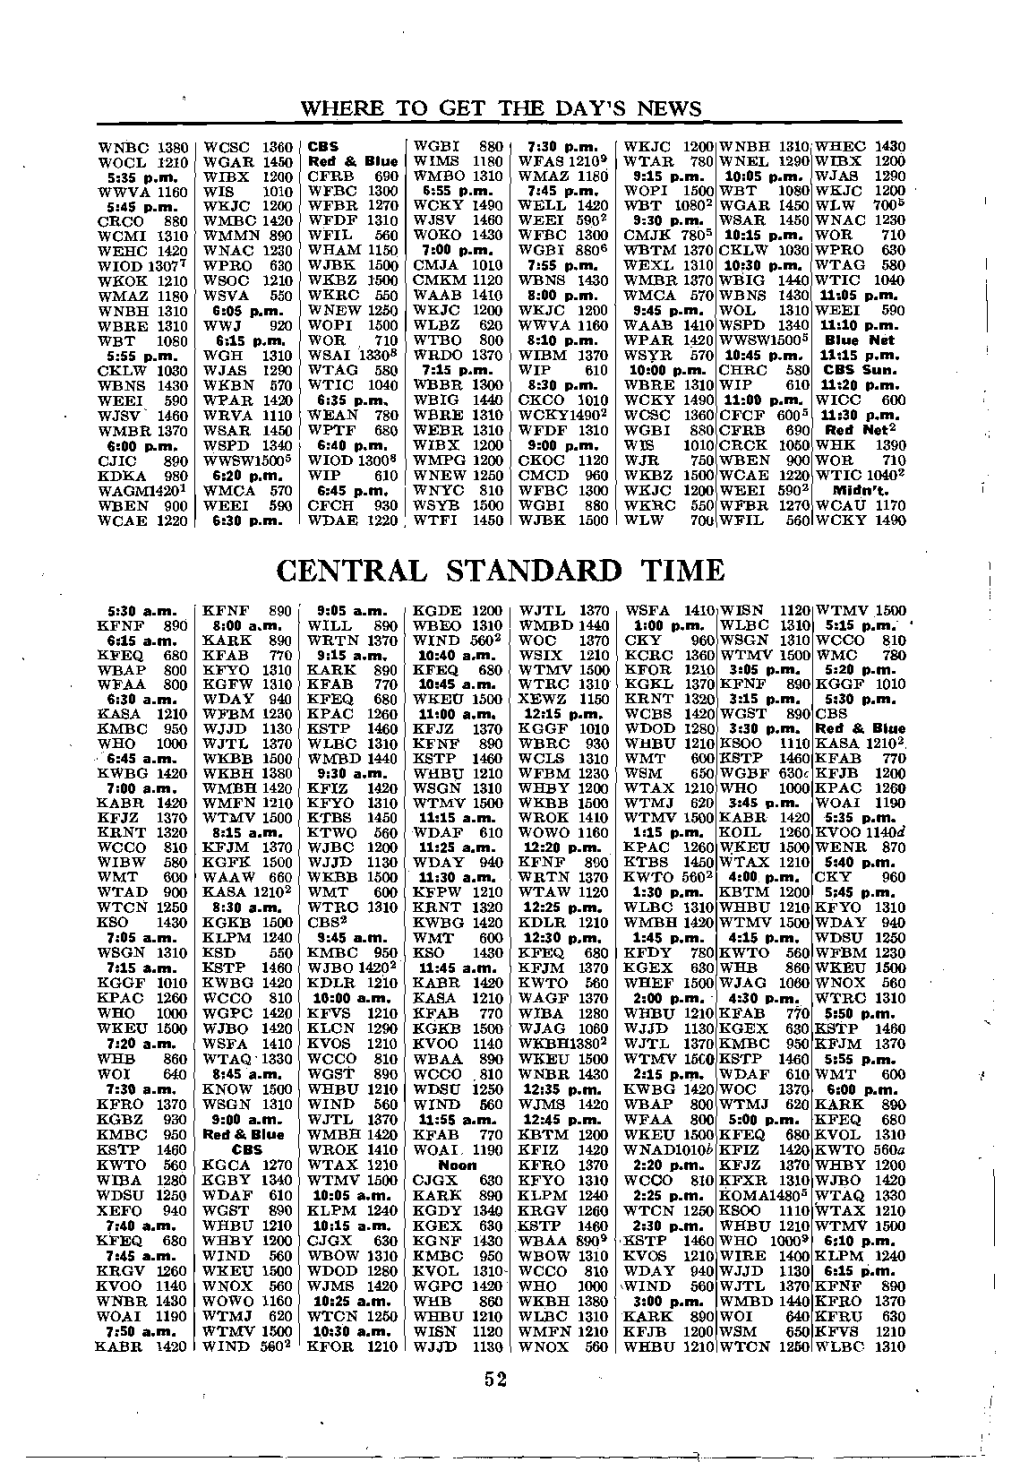 Central Standard Time